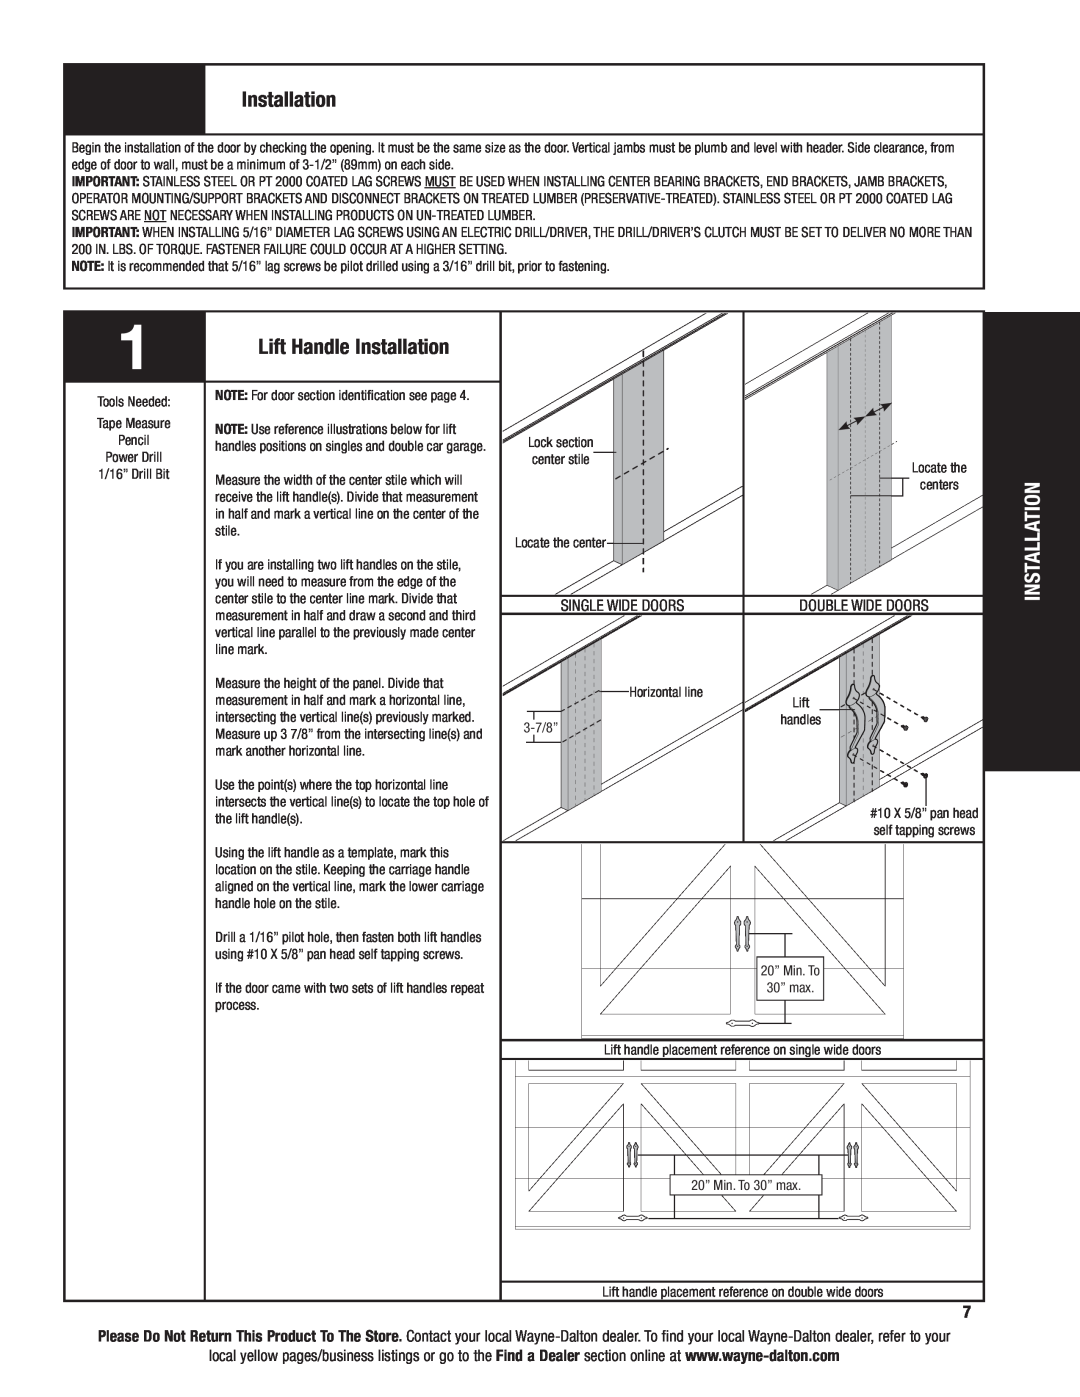 Wayne-Dalton 6100 installation instructions Lift Handle Installation, Single wide doors 